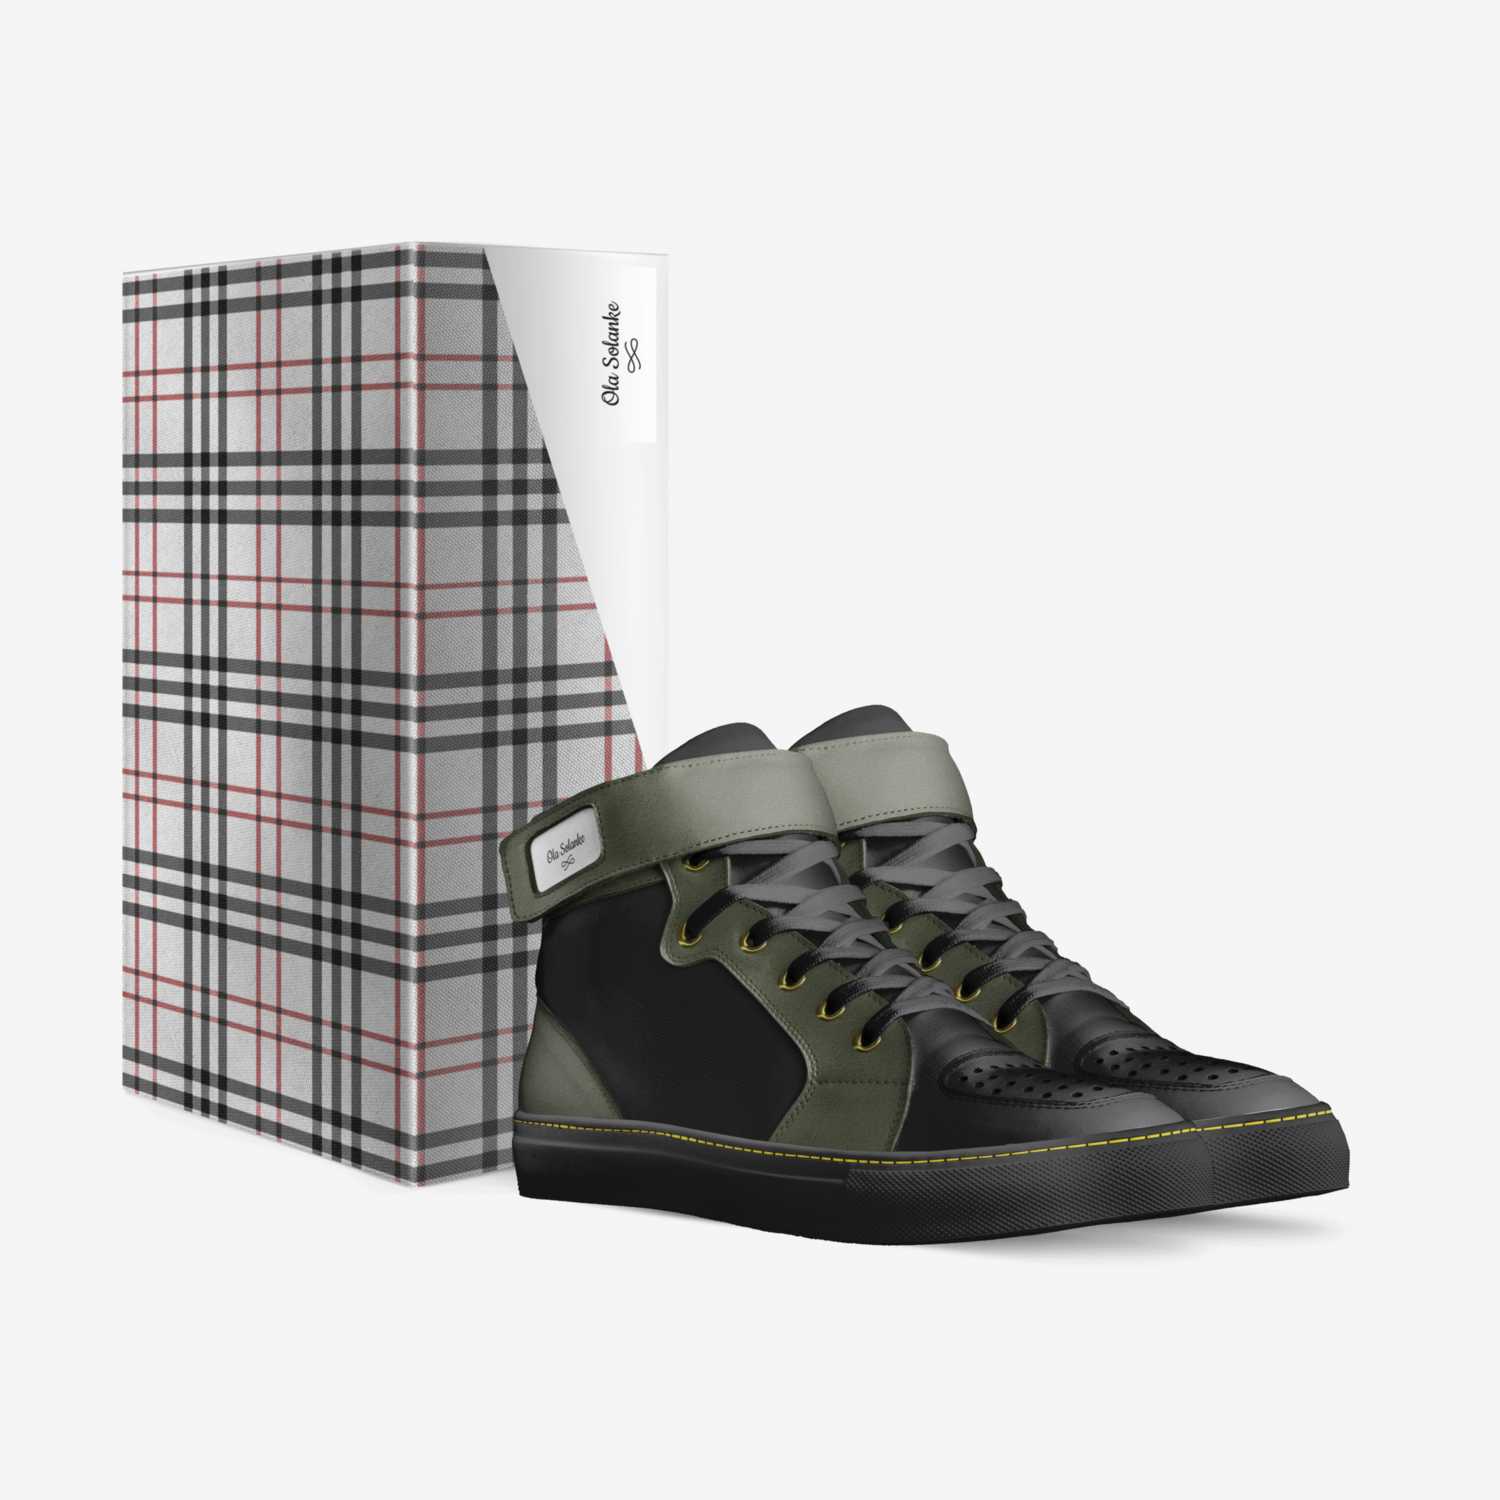 Ola Solanke custom made in Italy shoes by Ola Solanke | Box view